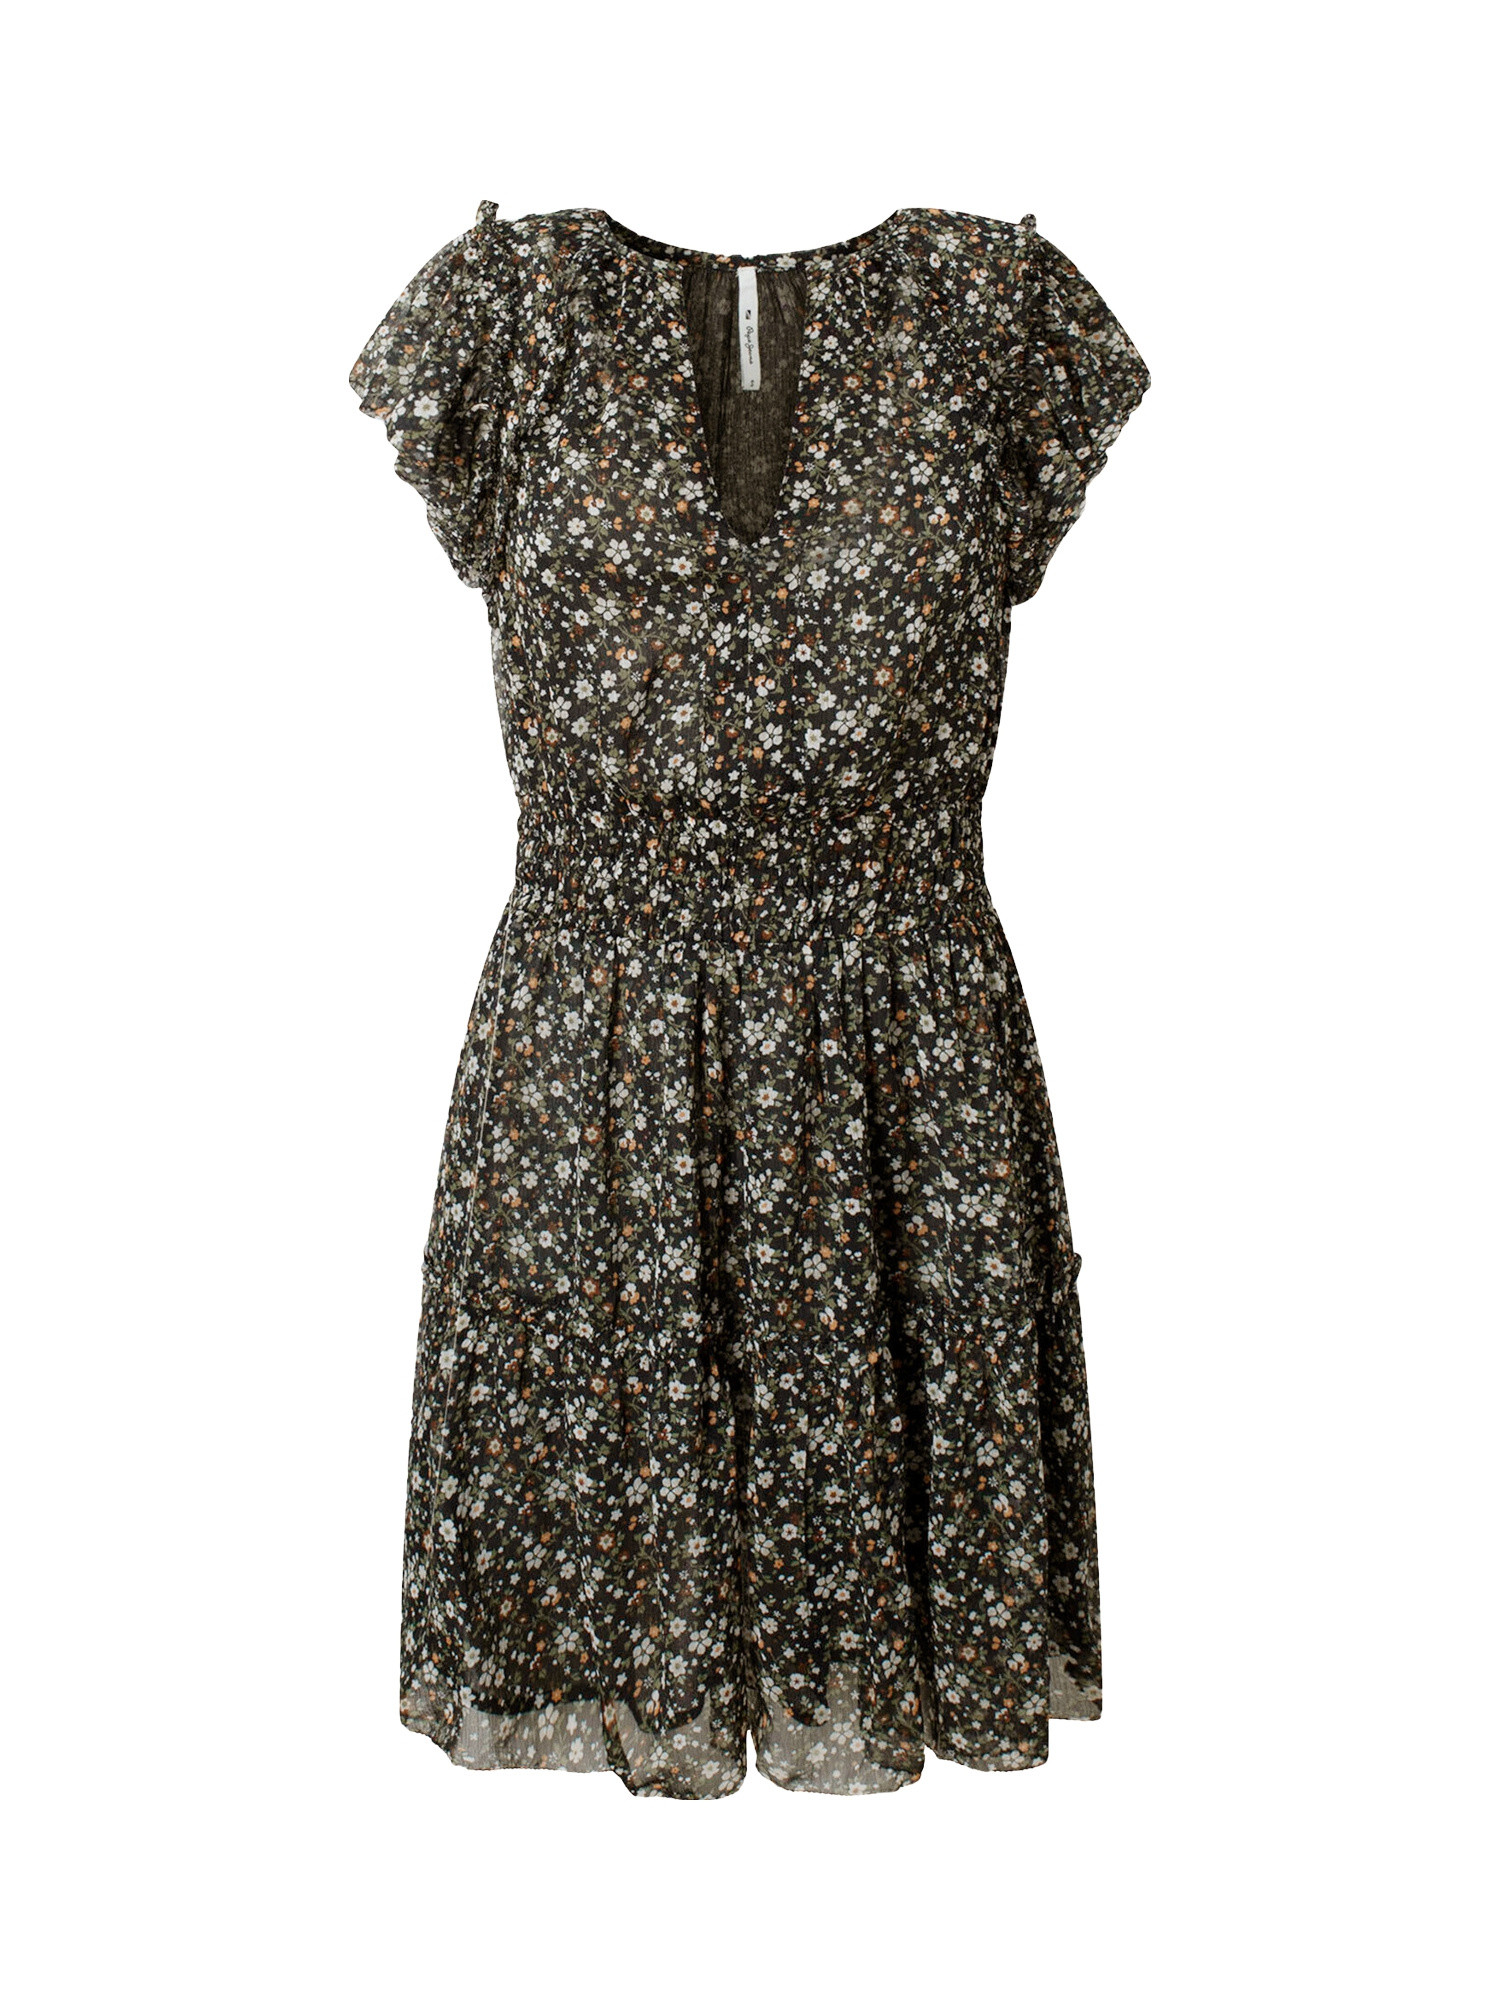 Pepe Jeans - Short dress with floral pattern, Black, large image number 0